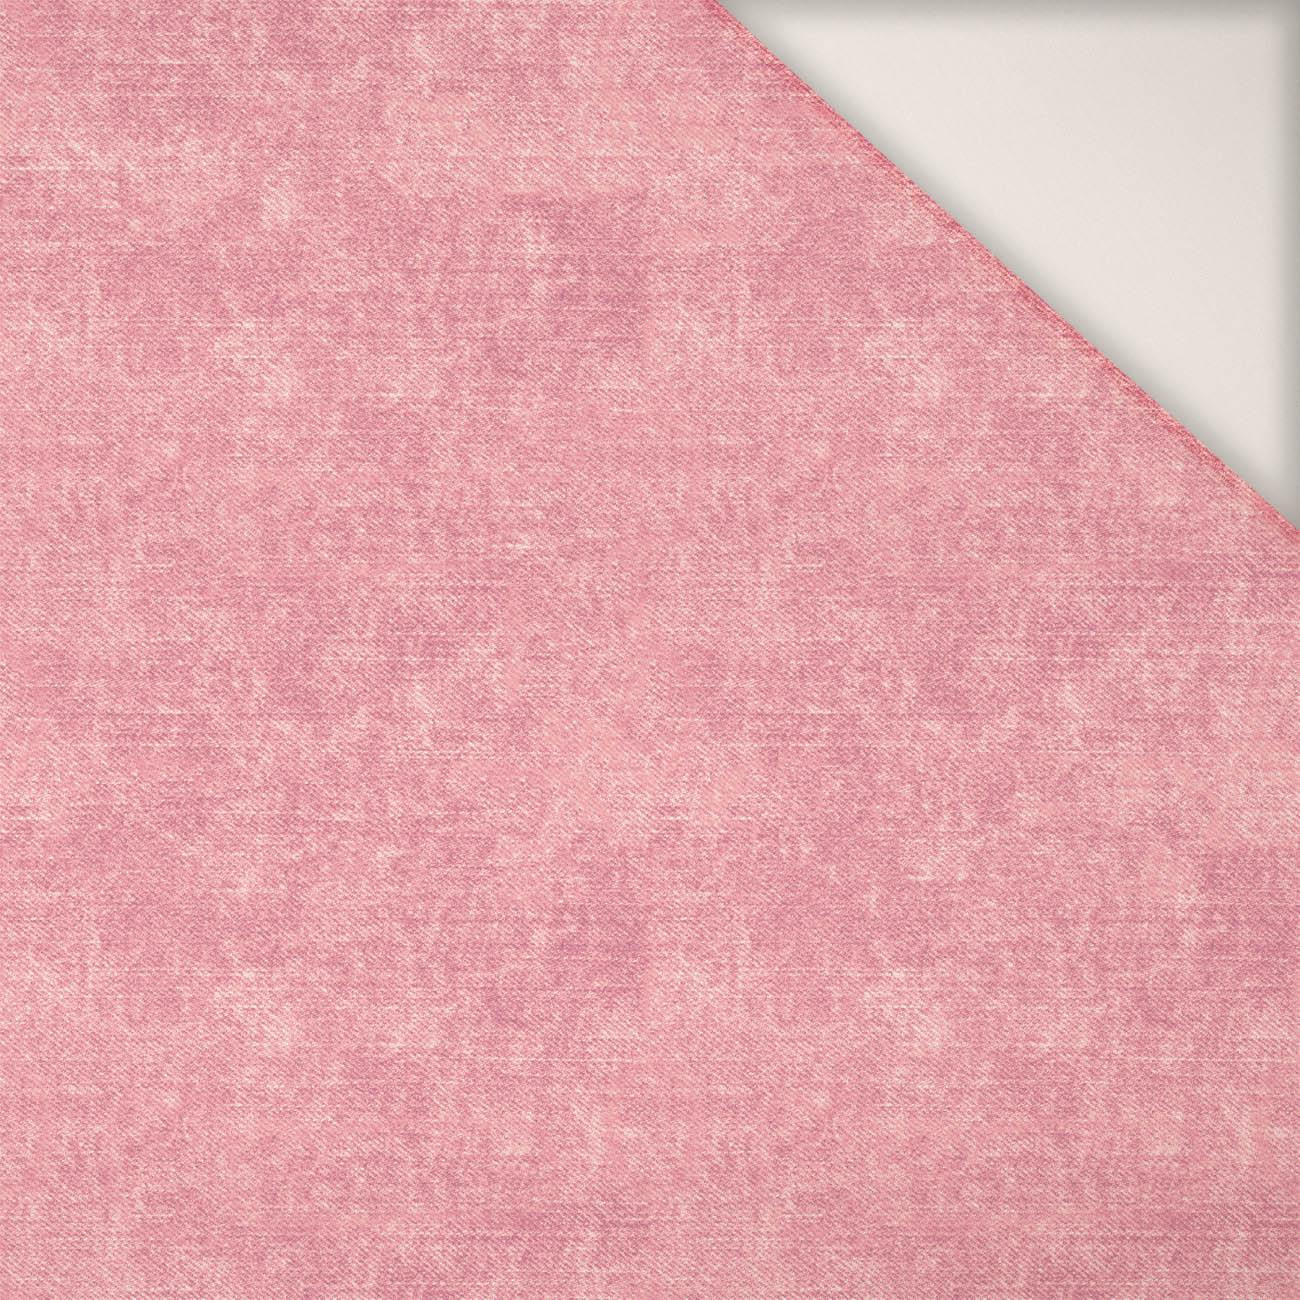 ACID WASH / ROSE QUARTZ - PERKAL Cotton fabric